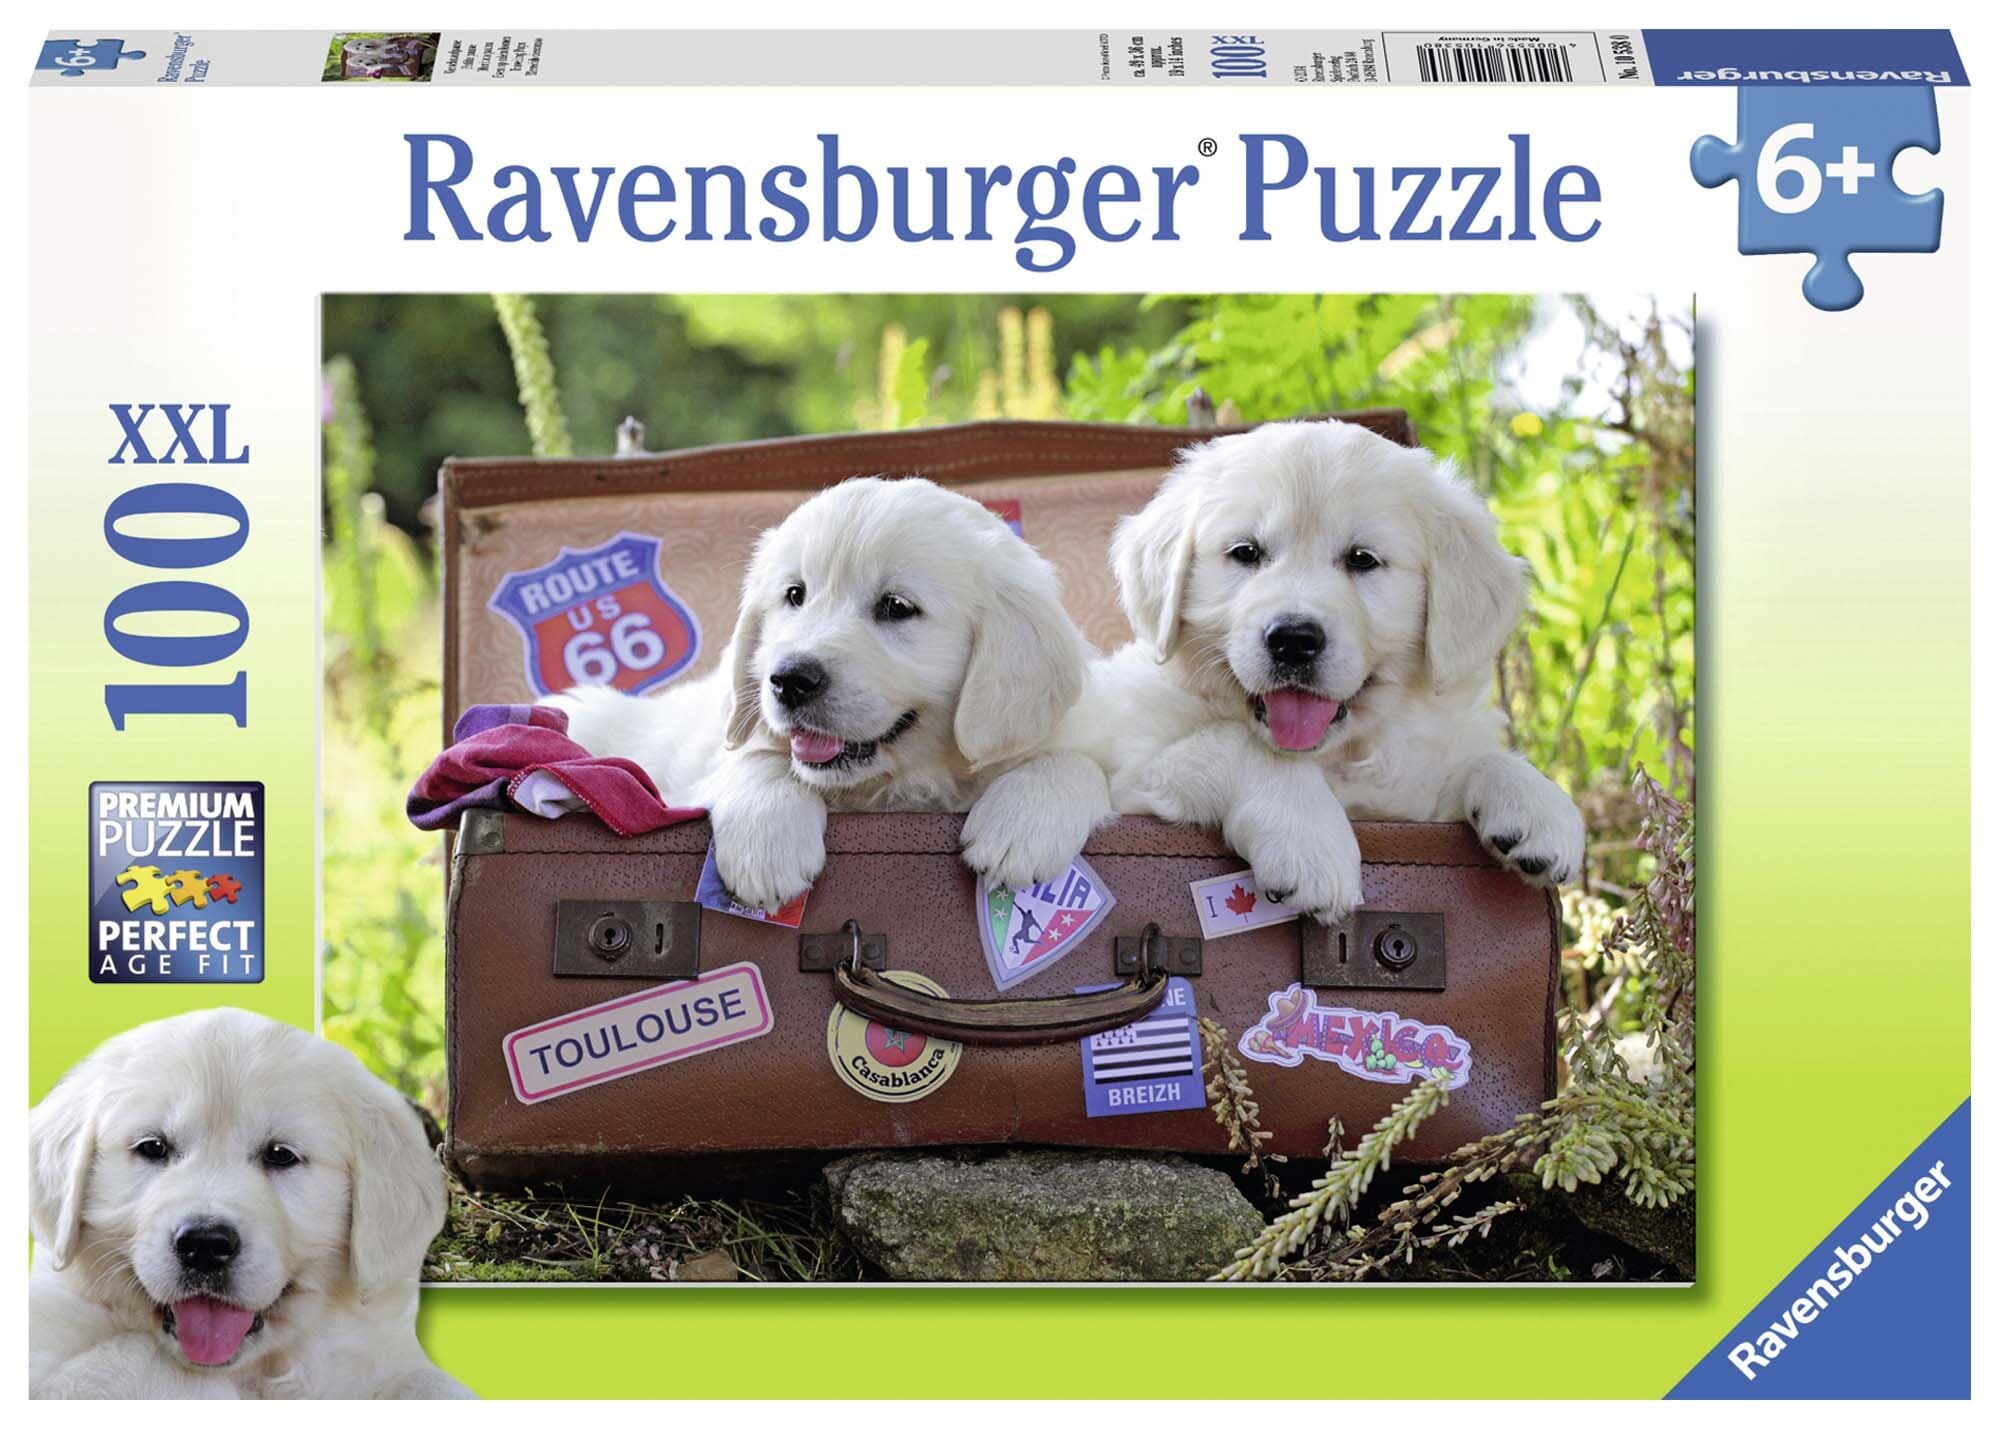 Ravensburger Puslespill, Traveling Pups 100 brikker XXL